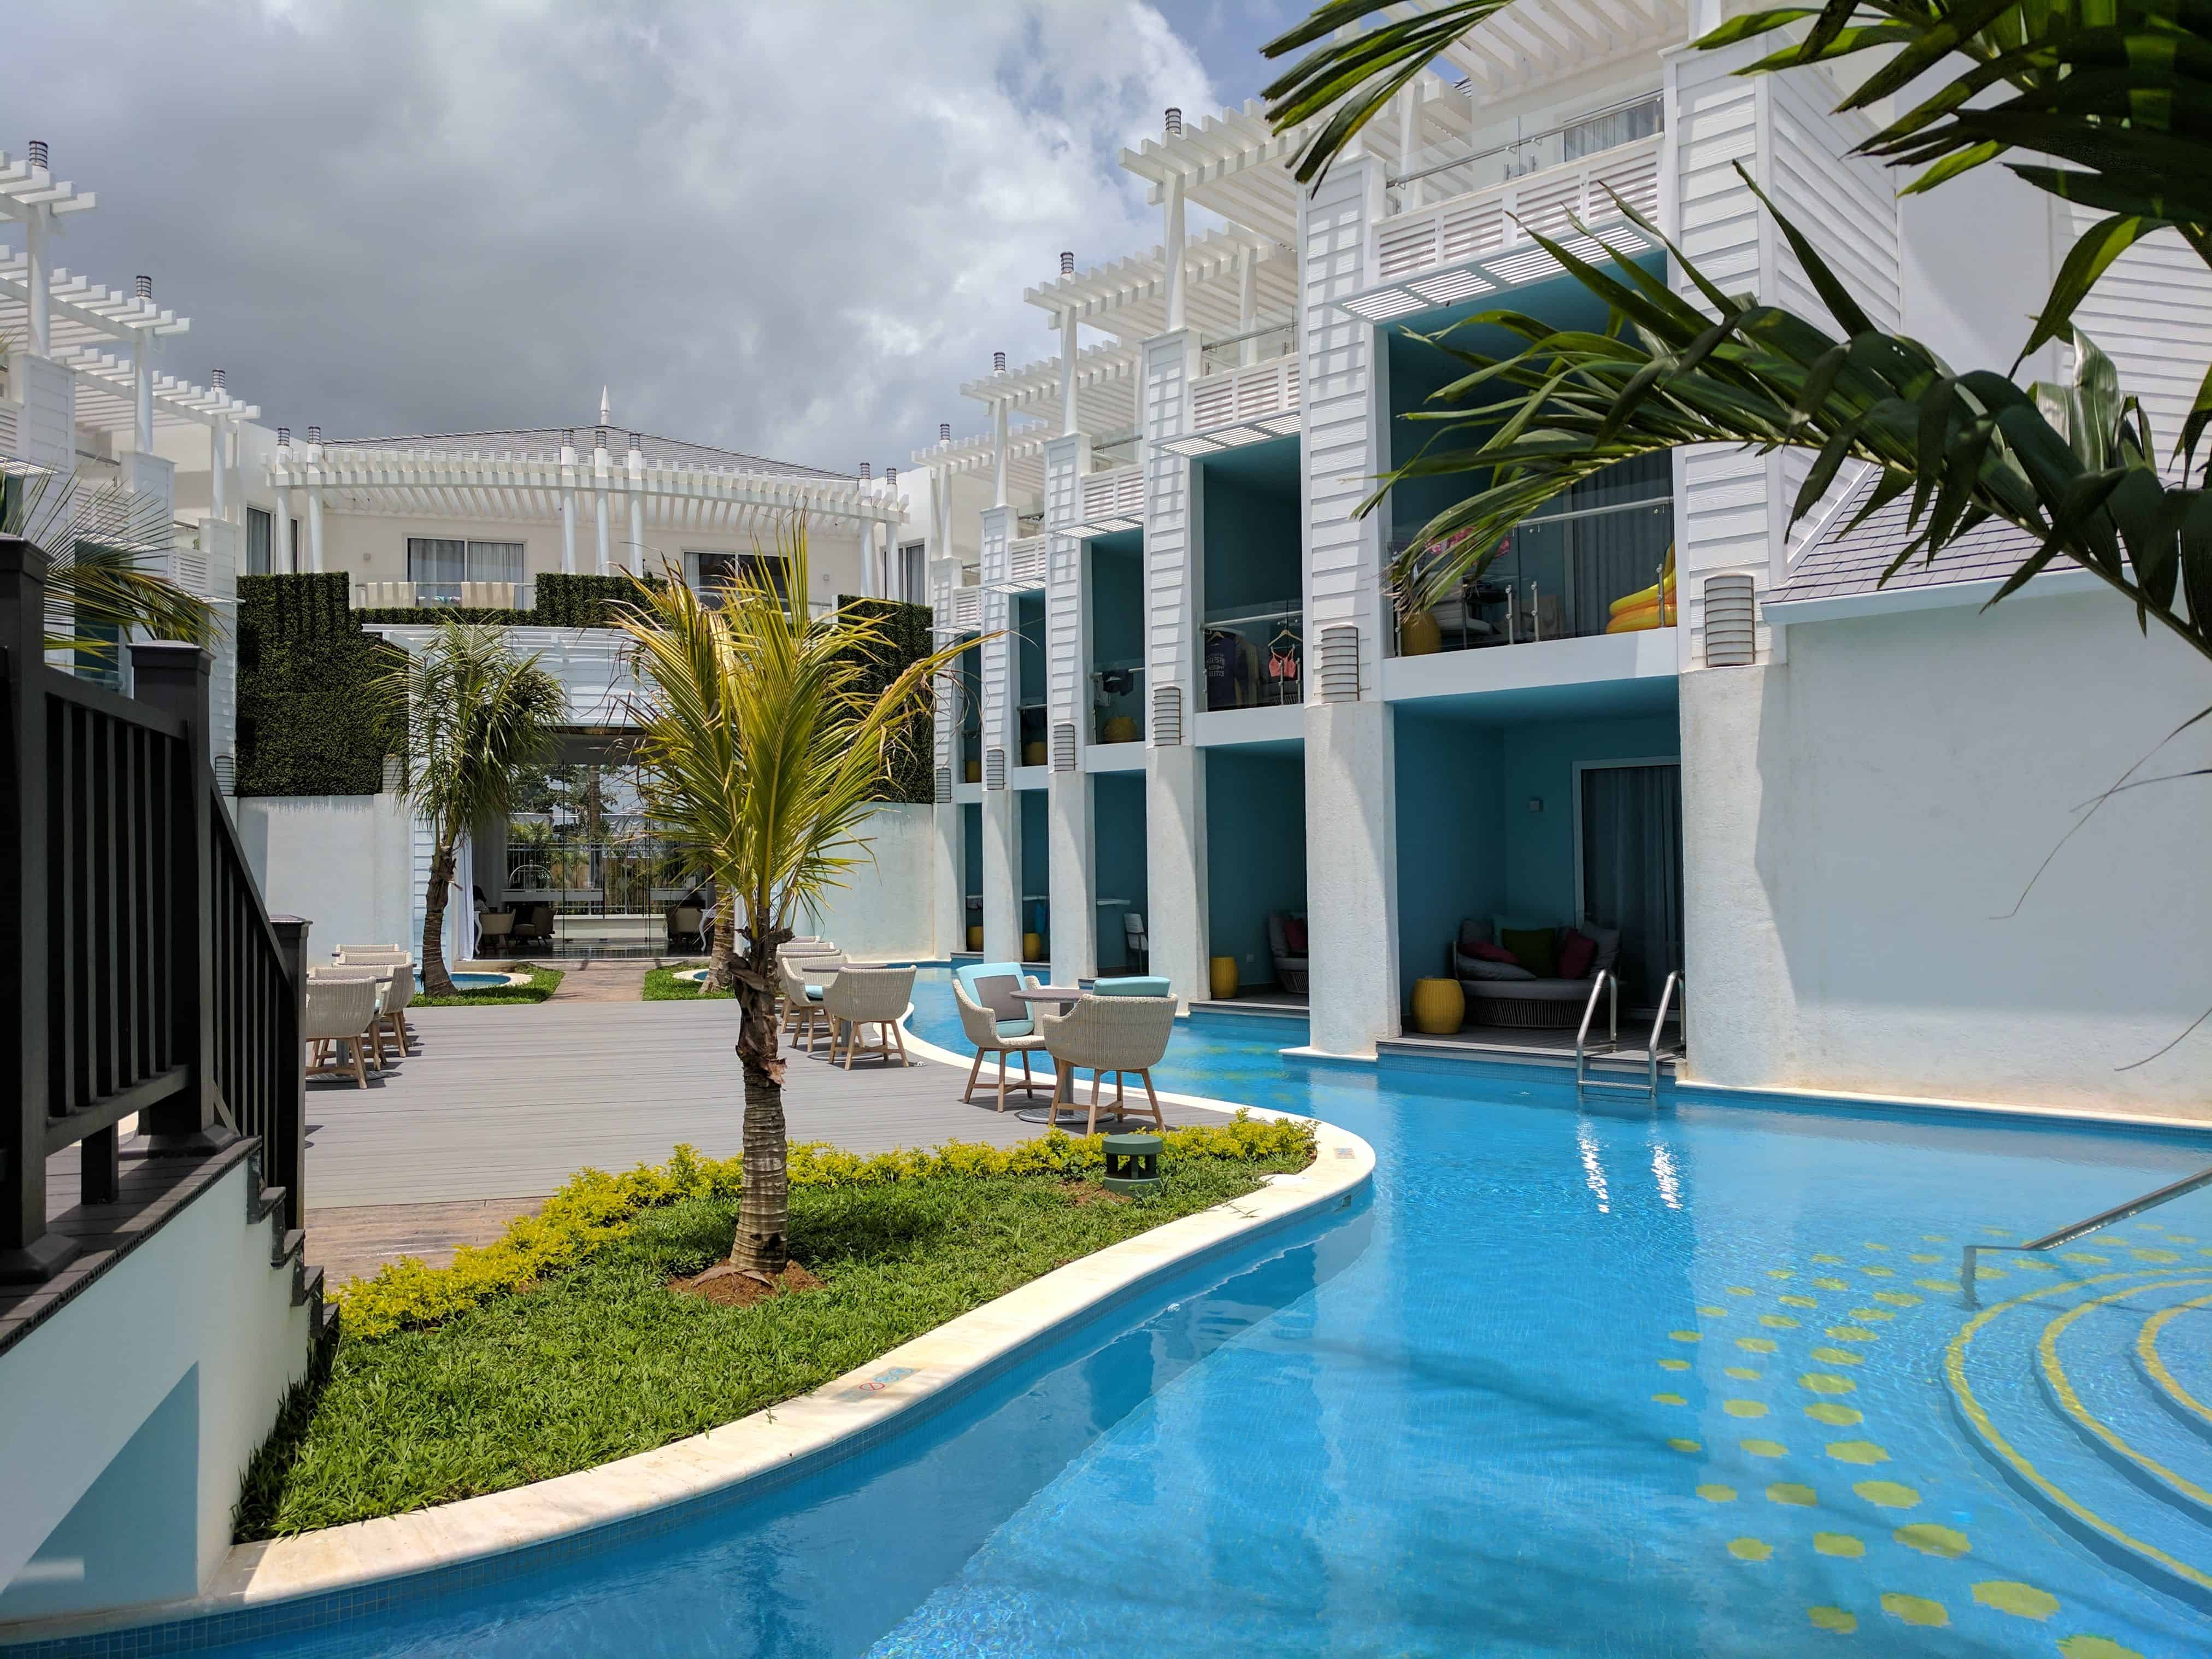 Azul Beach Resort Negril Private Airport Transfers Jamaica Get Away